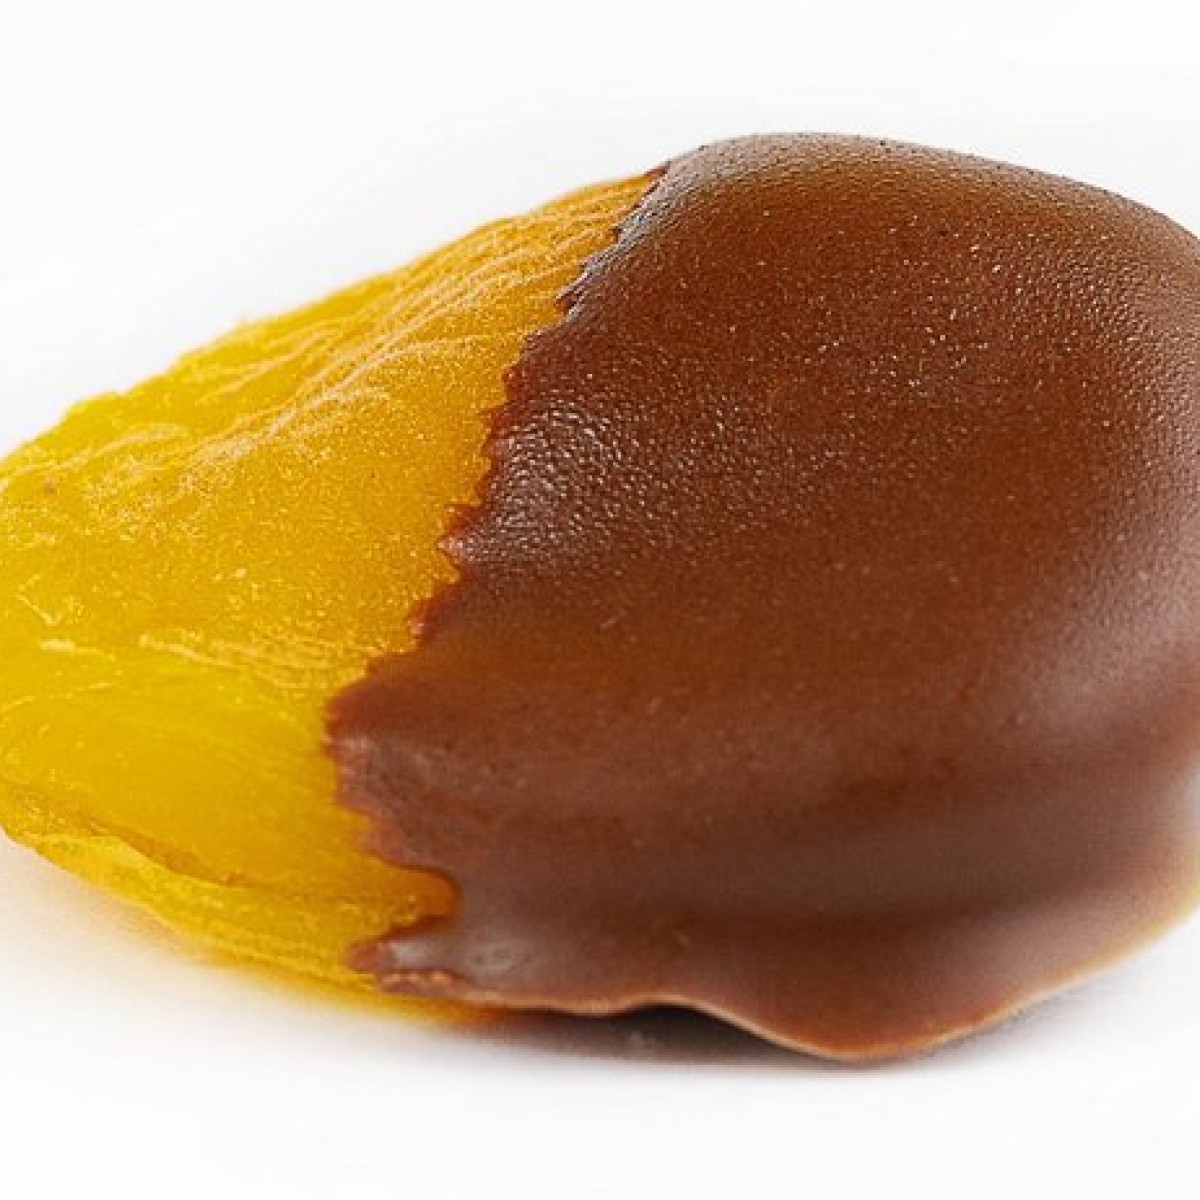 Clemens Chocolate - Drágeas de Damasco